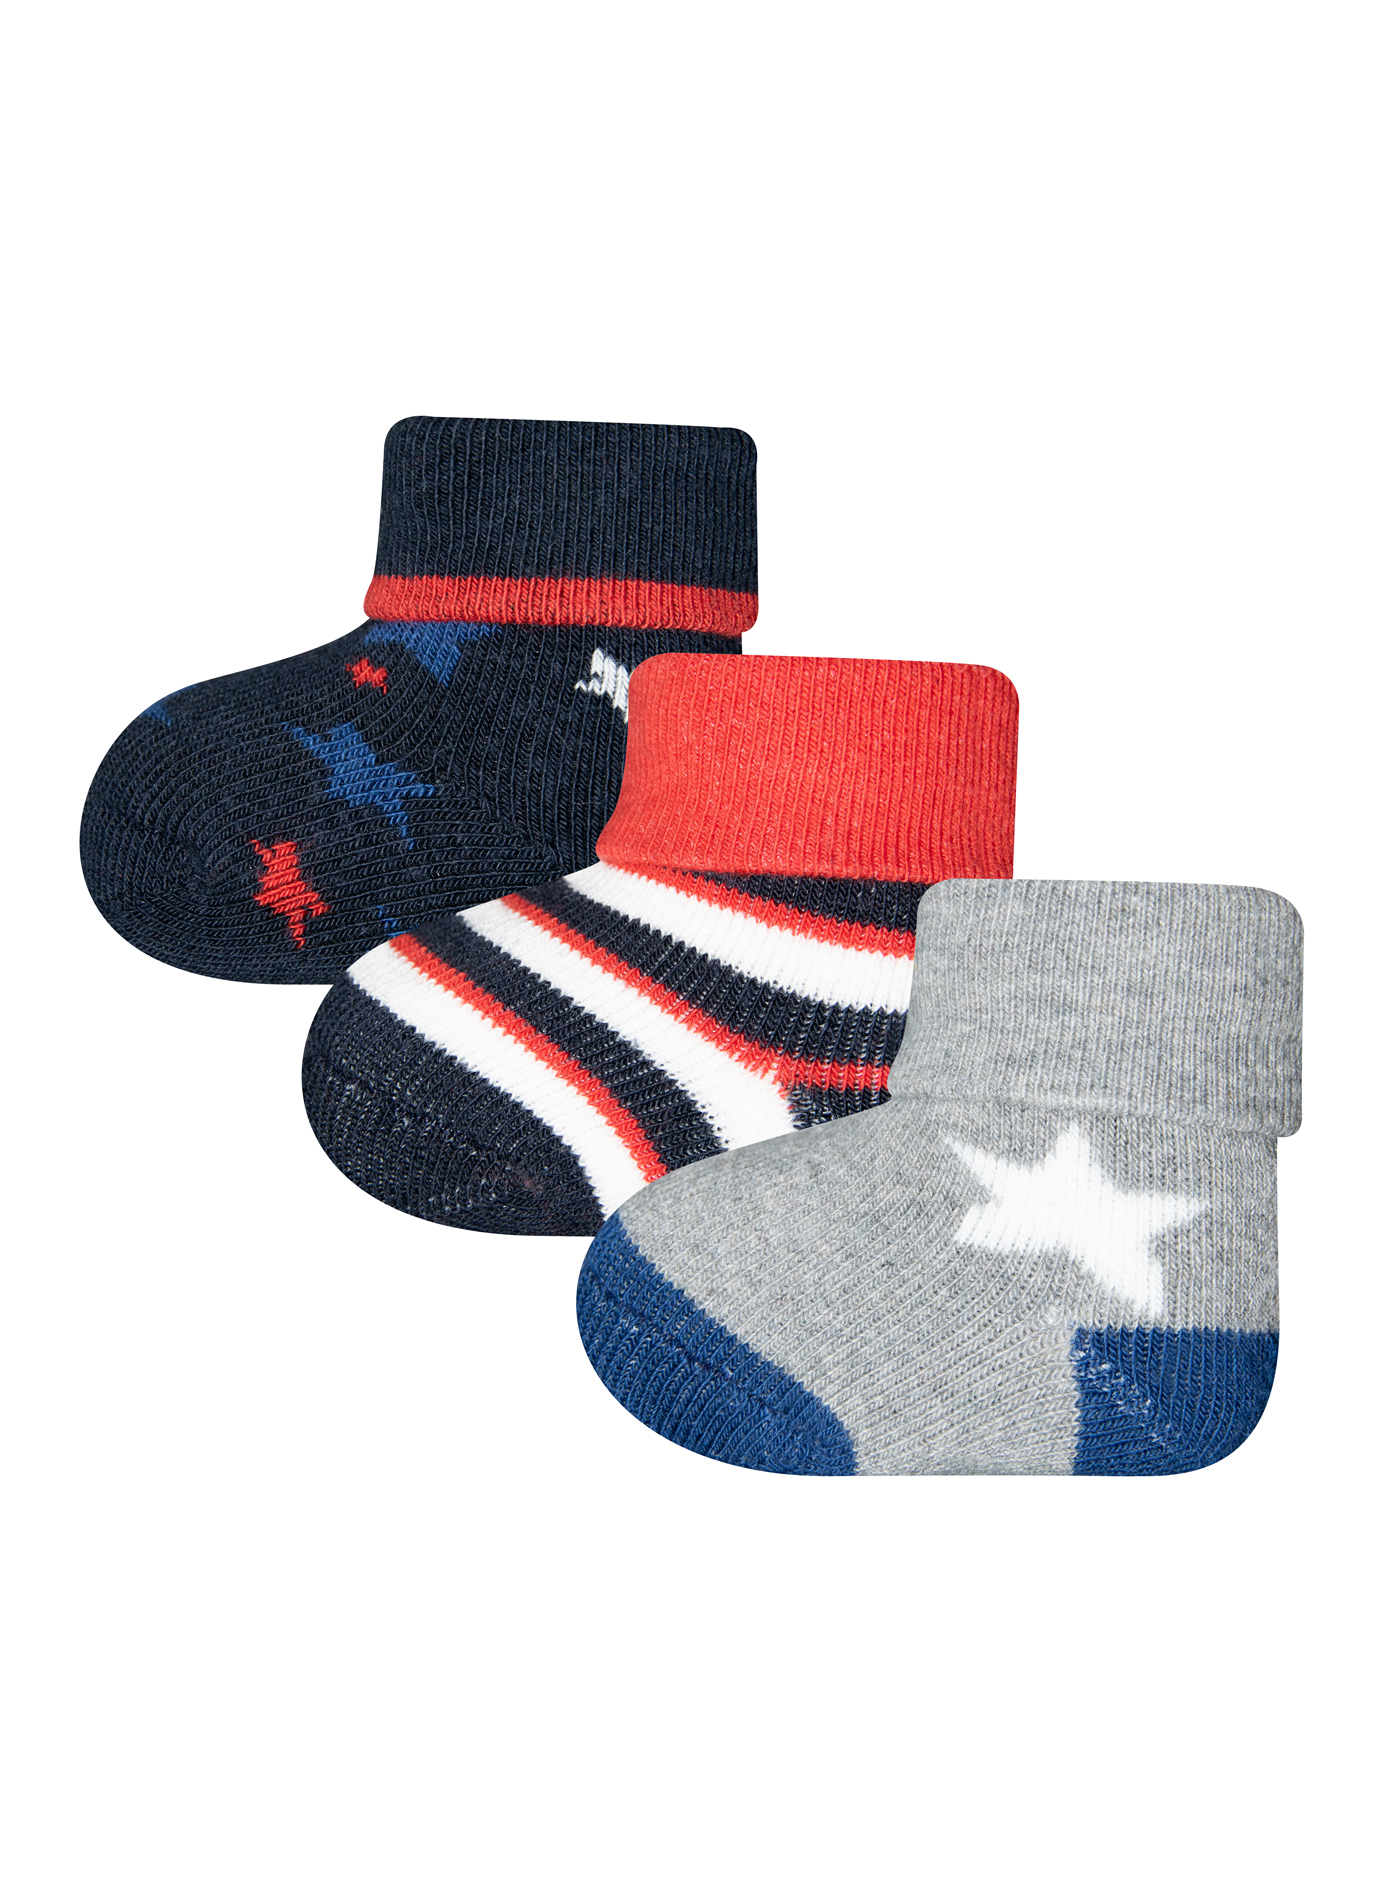 Jungen Erstlings-Socken (Dreierpack) Sterne und Ringel